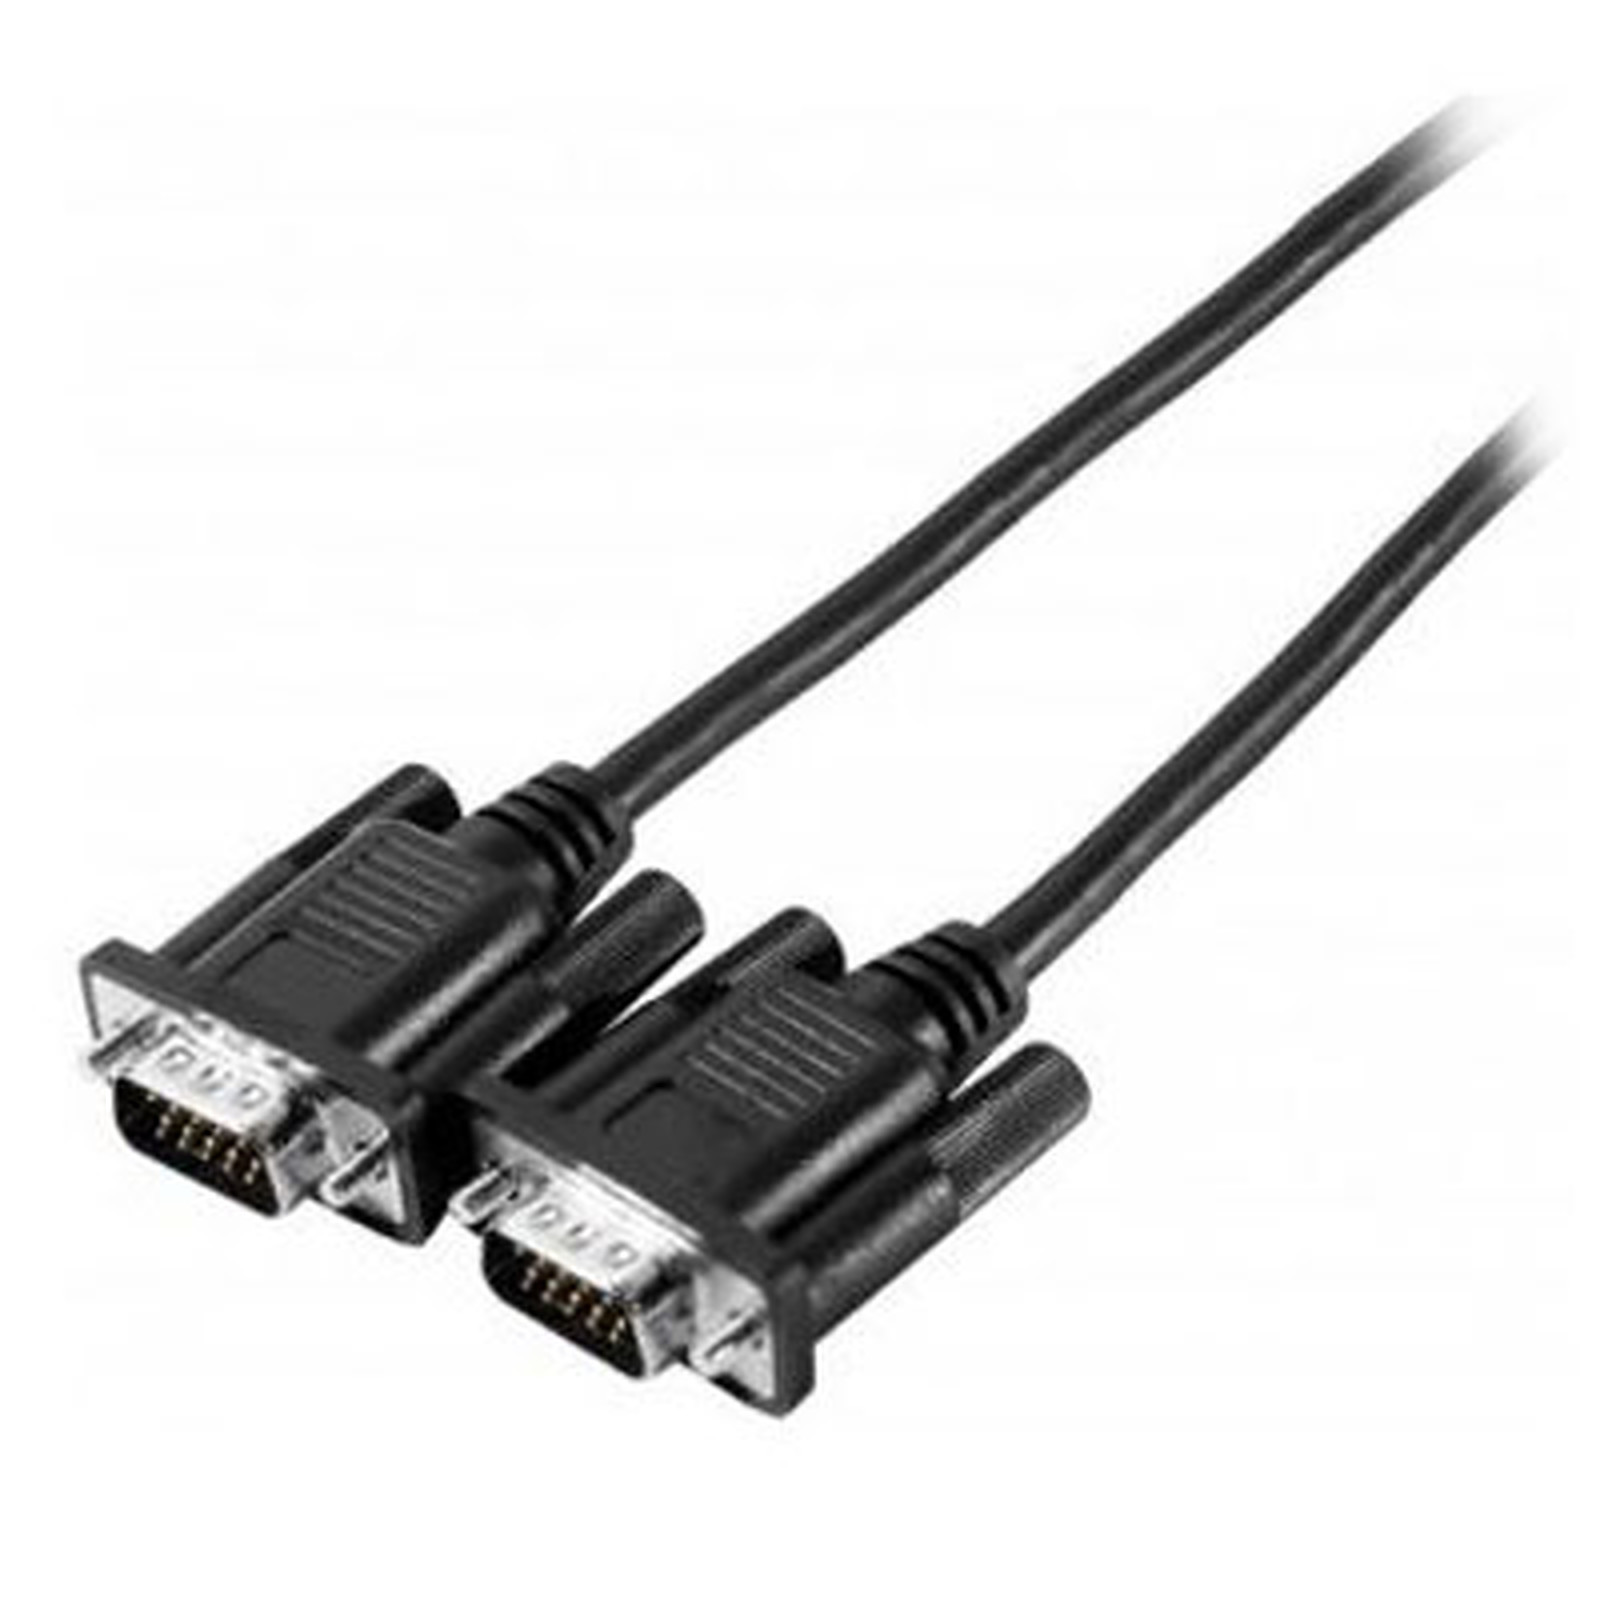 Cable VGA male / male (10 mètres) - VGA Generique